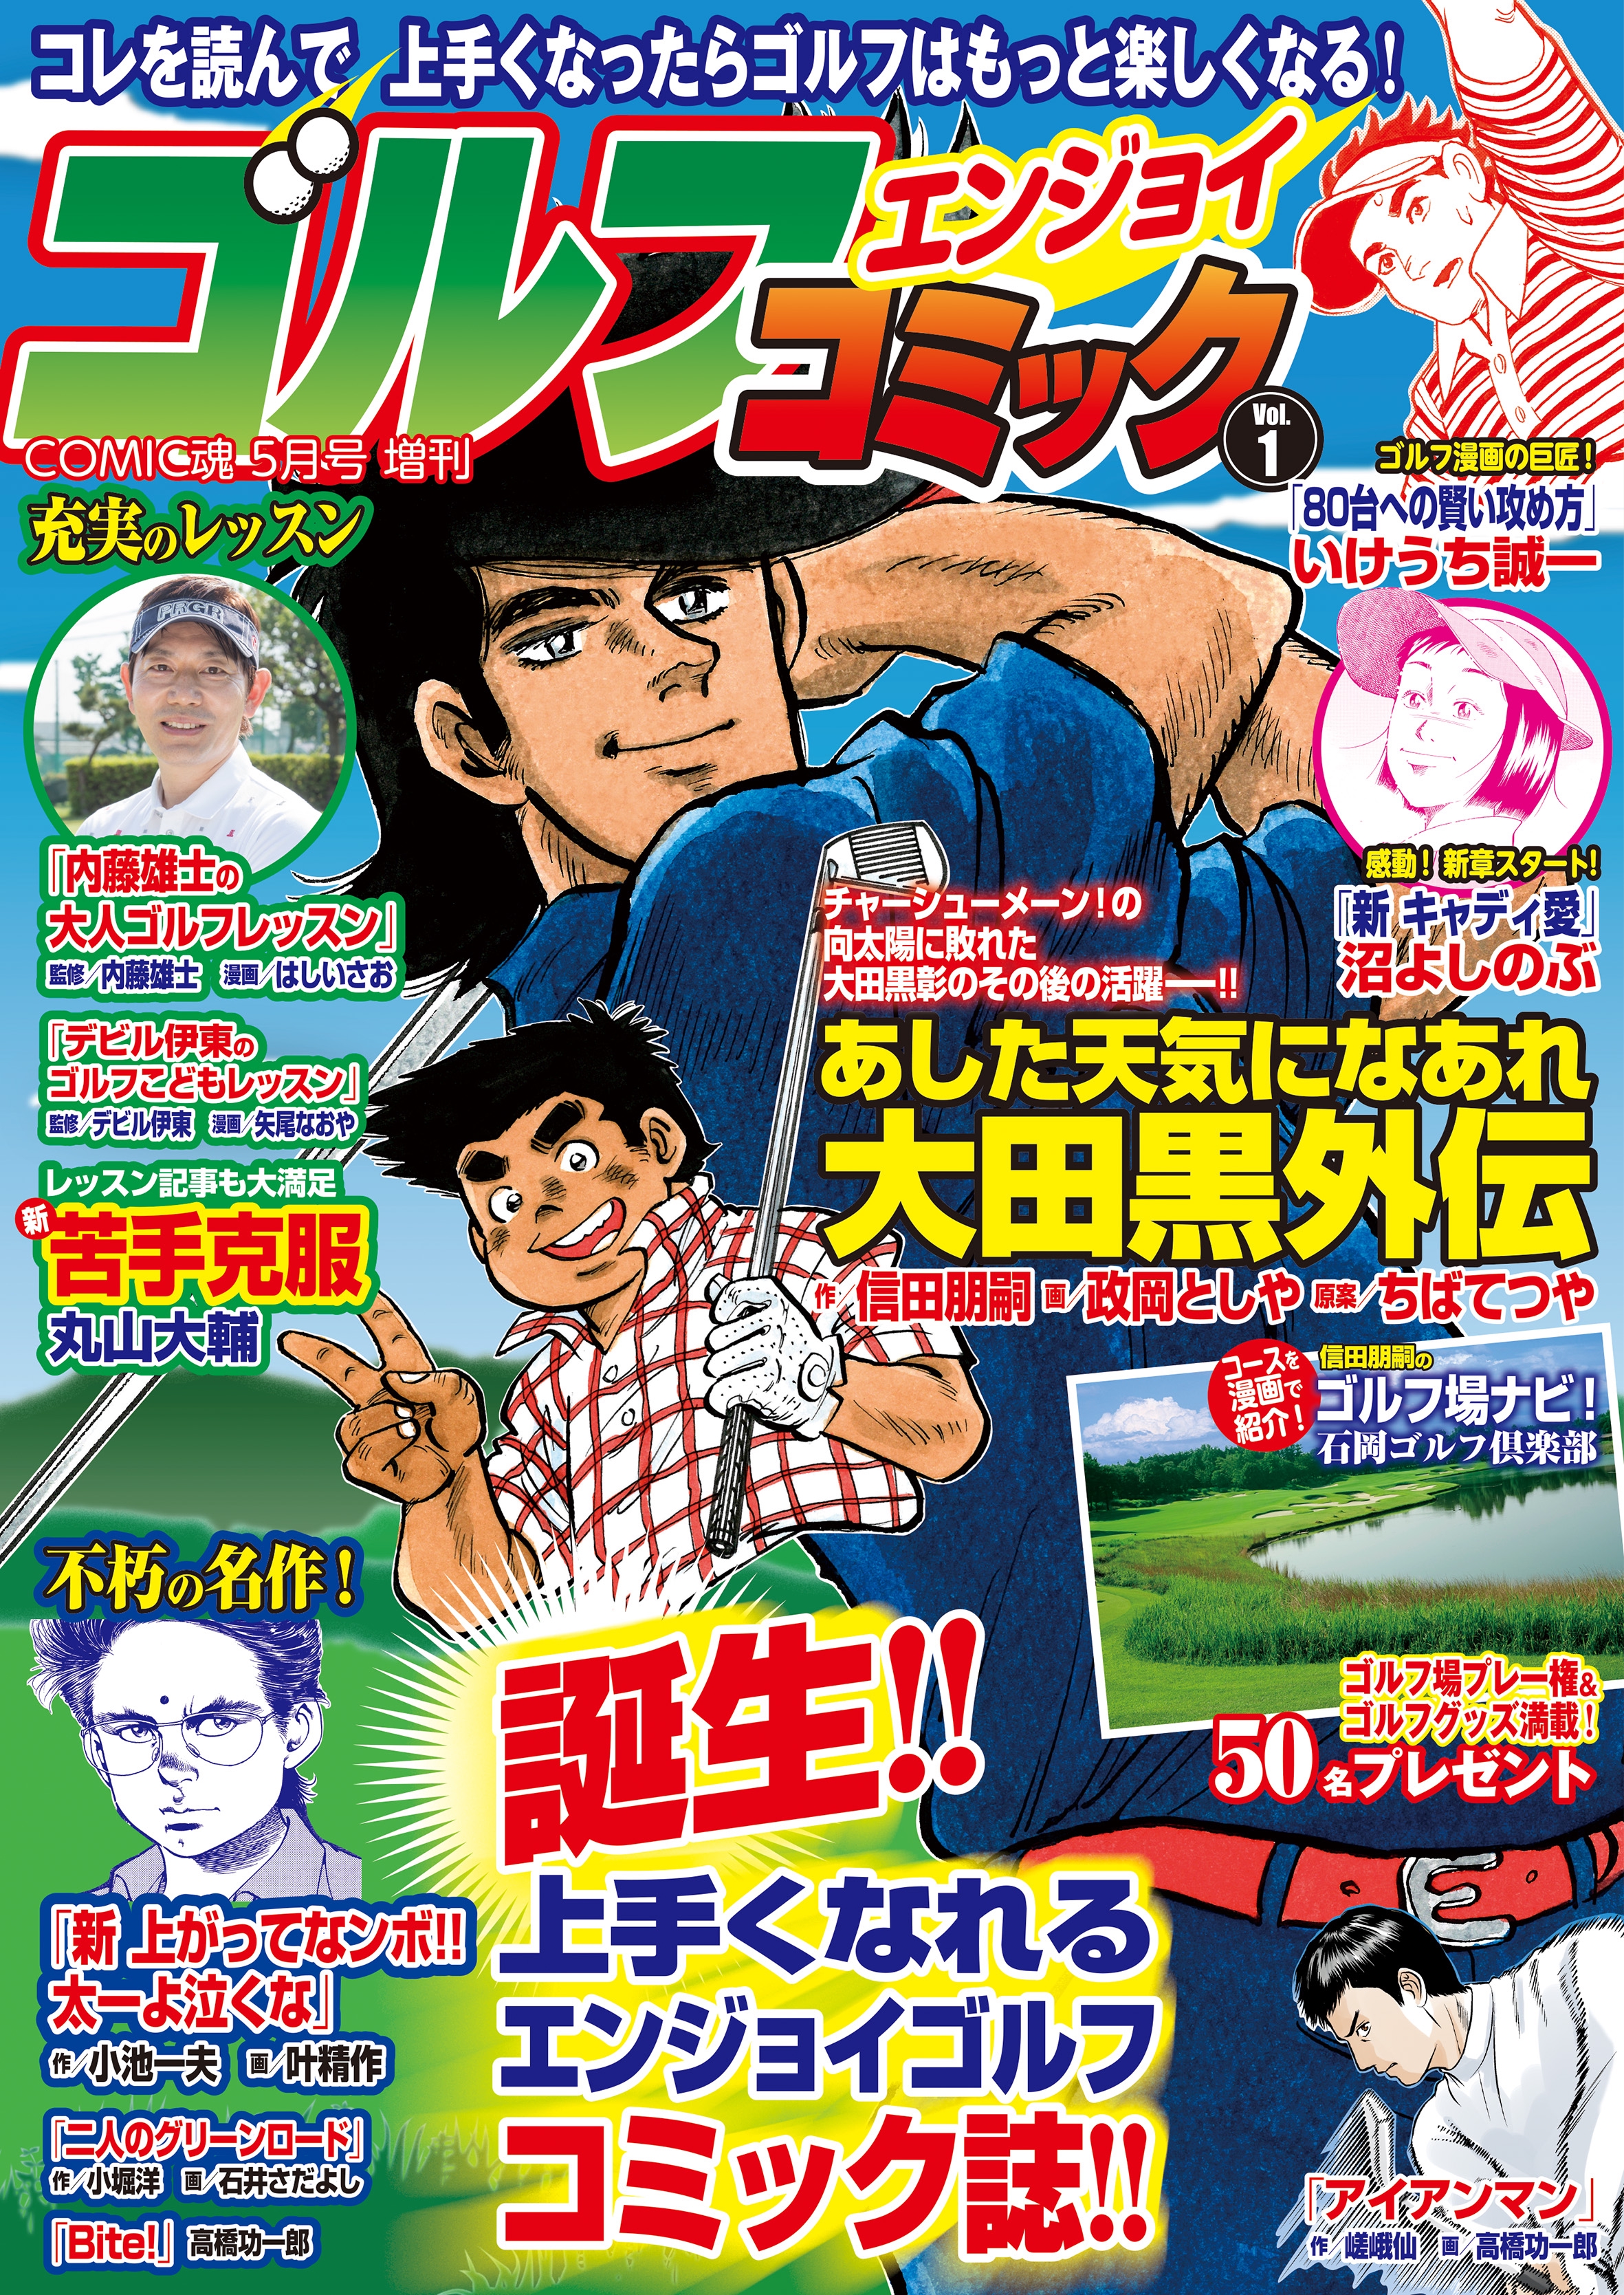 COMIC魂5月号増刊「ゴルフエンジョイコミック」Vol.1 2019年3月 